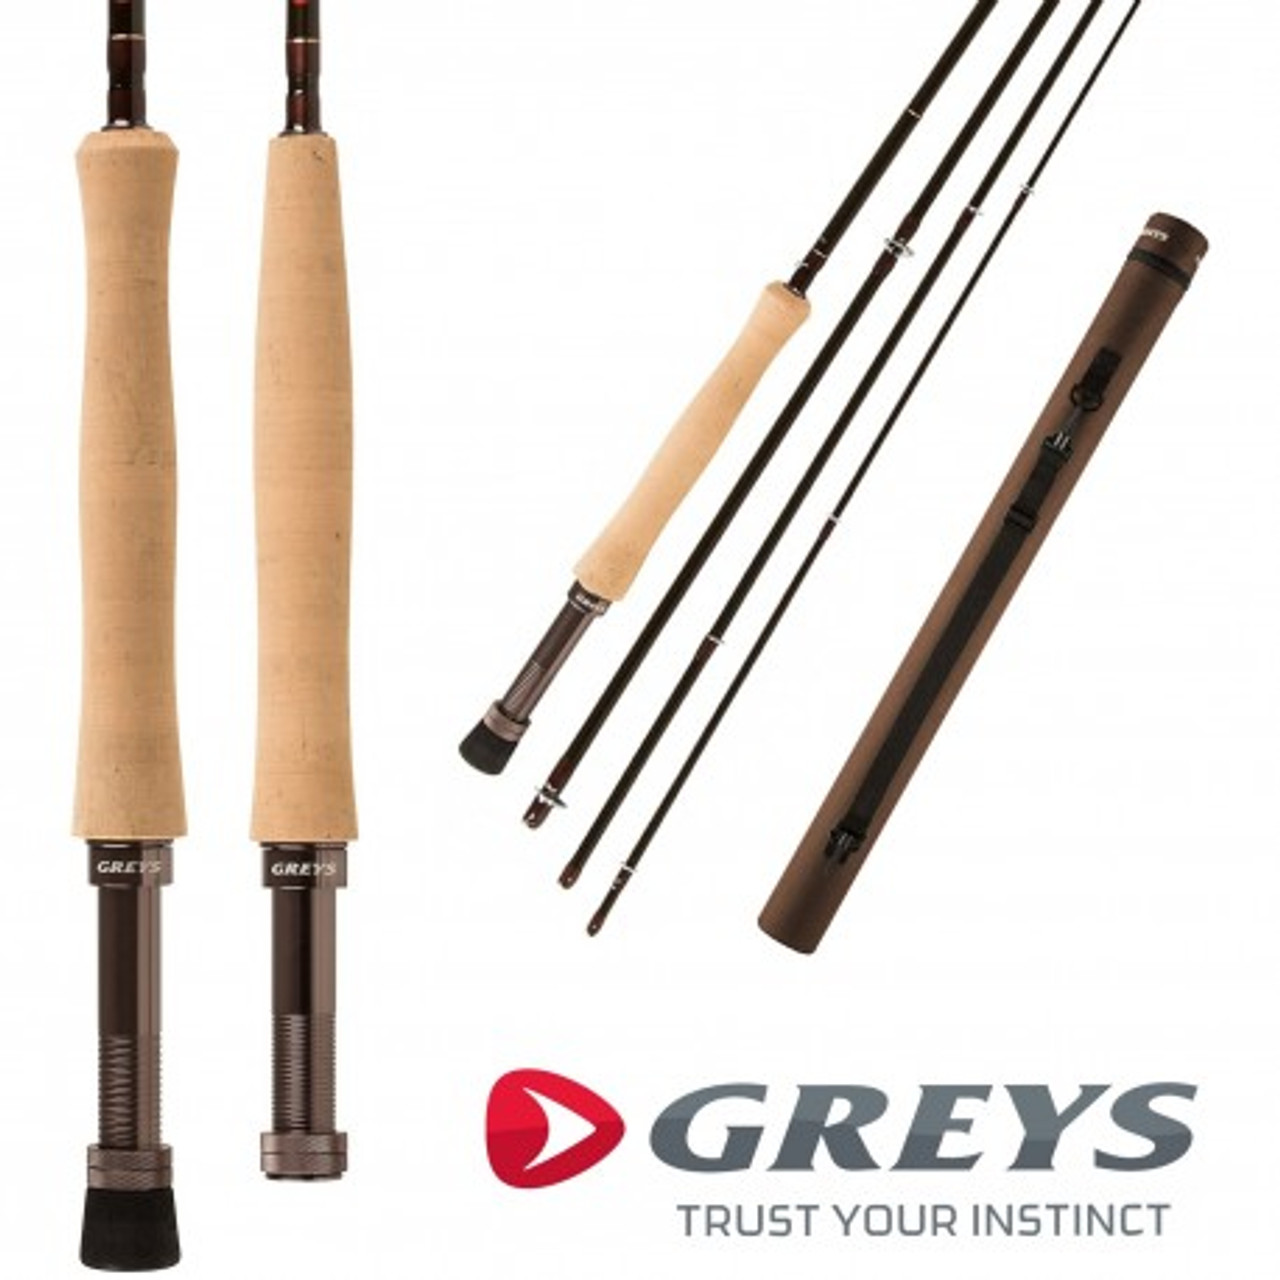 Greys GR40 Fly Rods